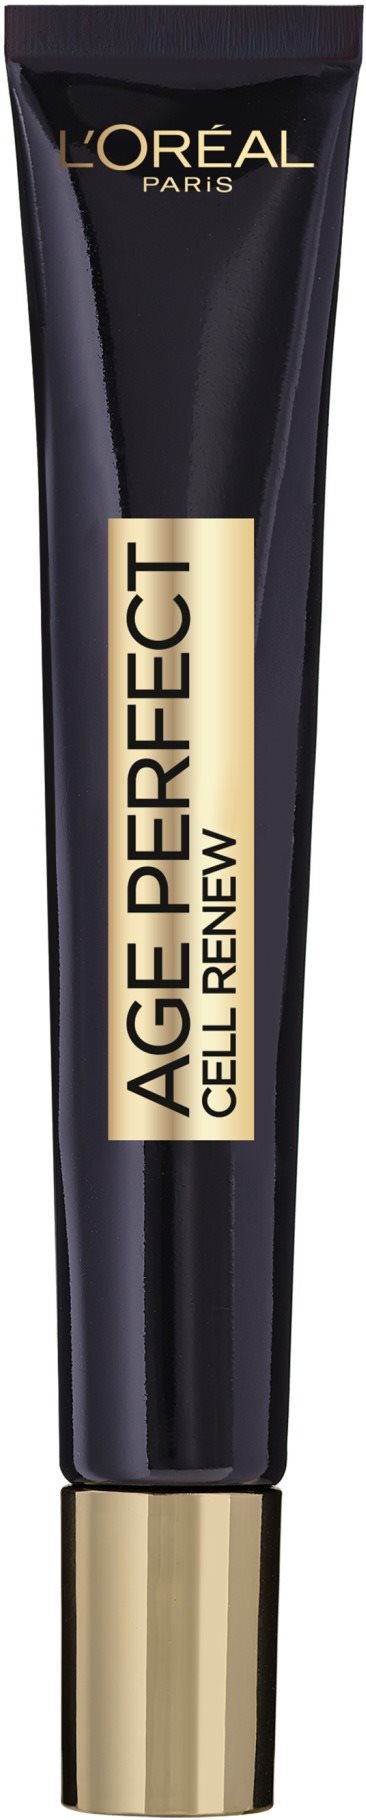 ĽORÉAL PARIS Age Perfect Cell Renew Eye Cream 15 ml